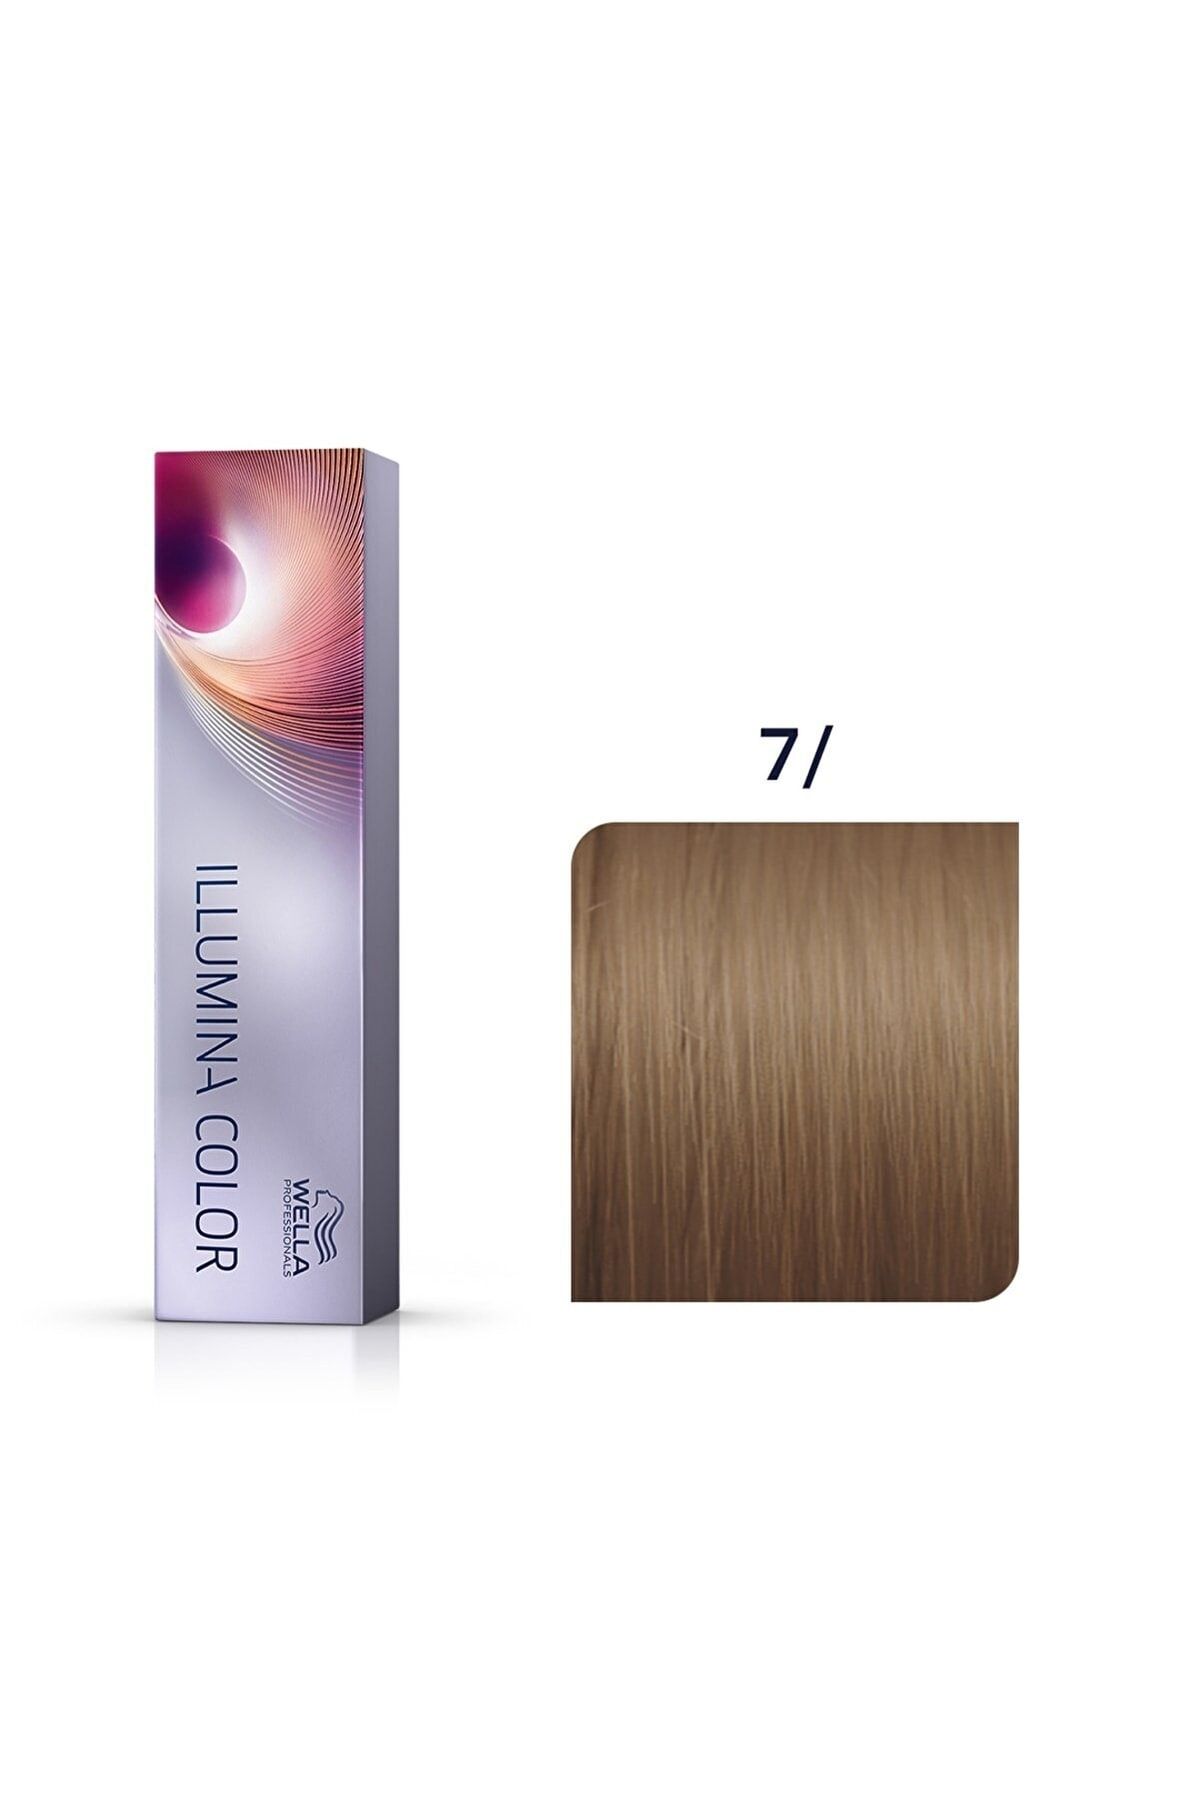 Wella Illumina Süper Color 7/ Orta Kumral Saç Boyası 60ml.